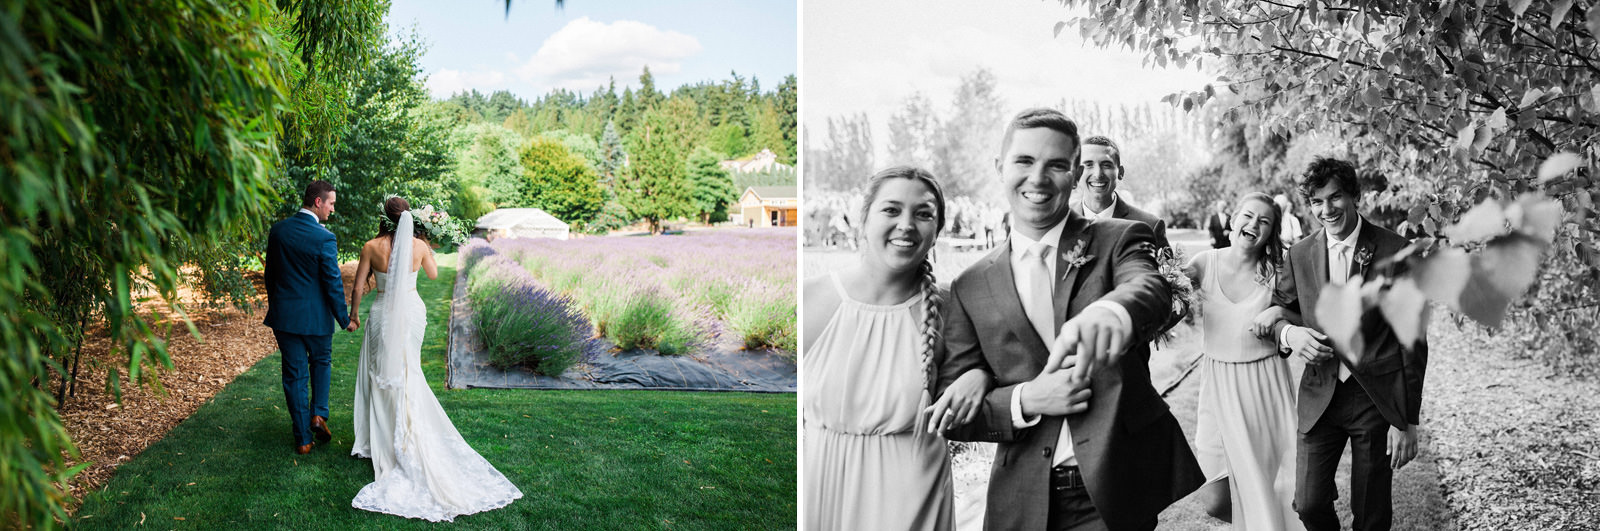 048-woodinville-lavendar-farm-wedding-with-golden-glowy-photos.jpg